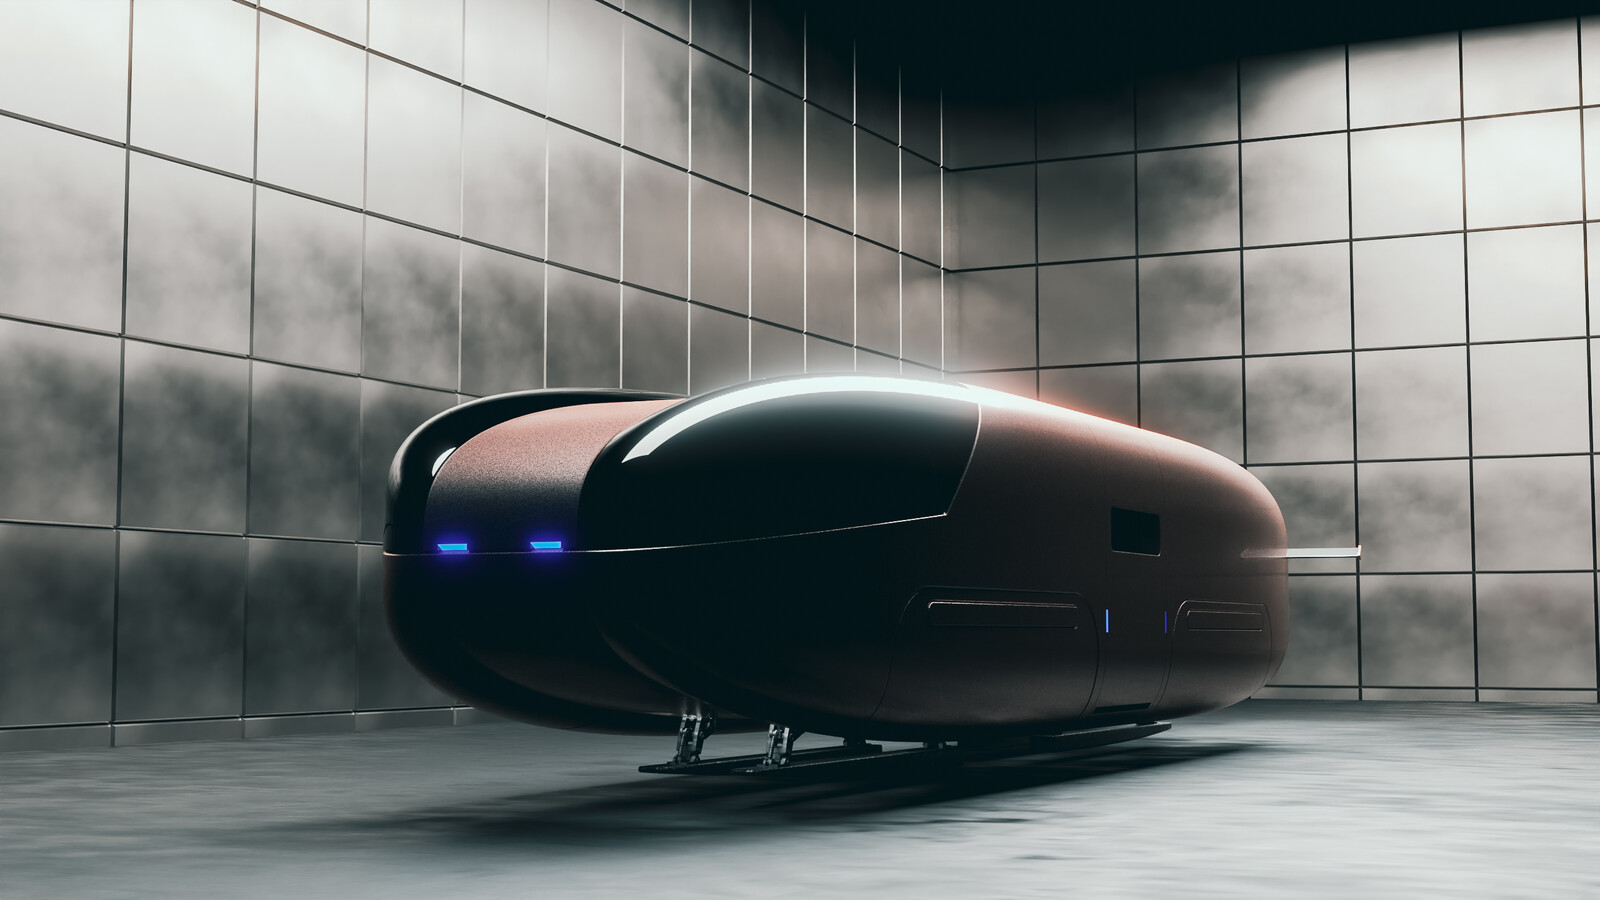 Concept: Future Transportation